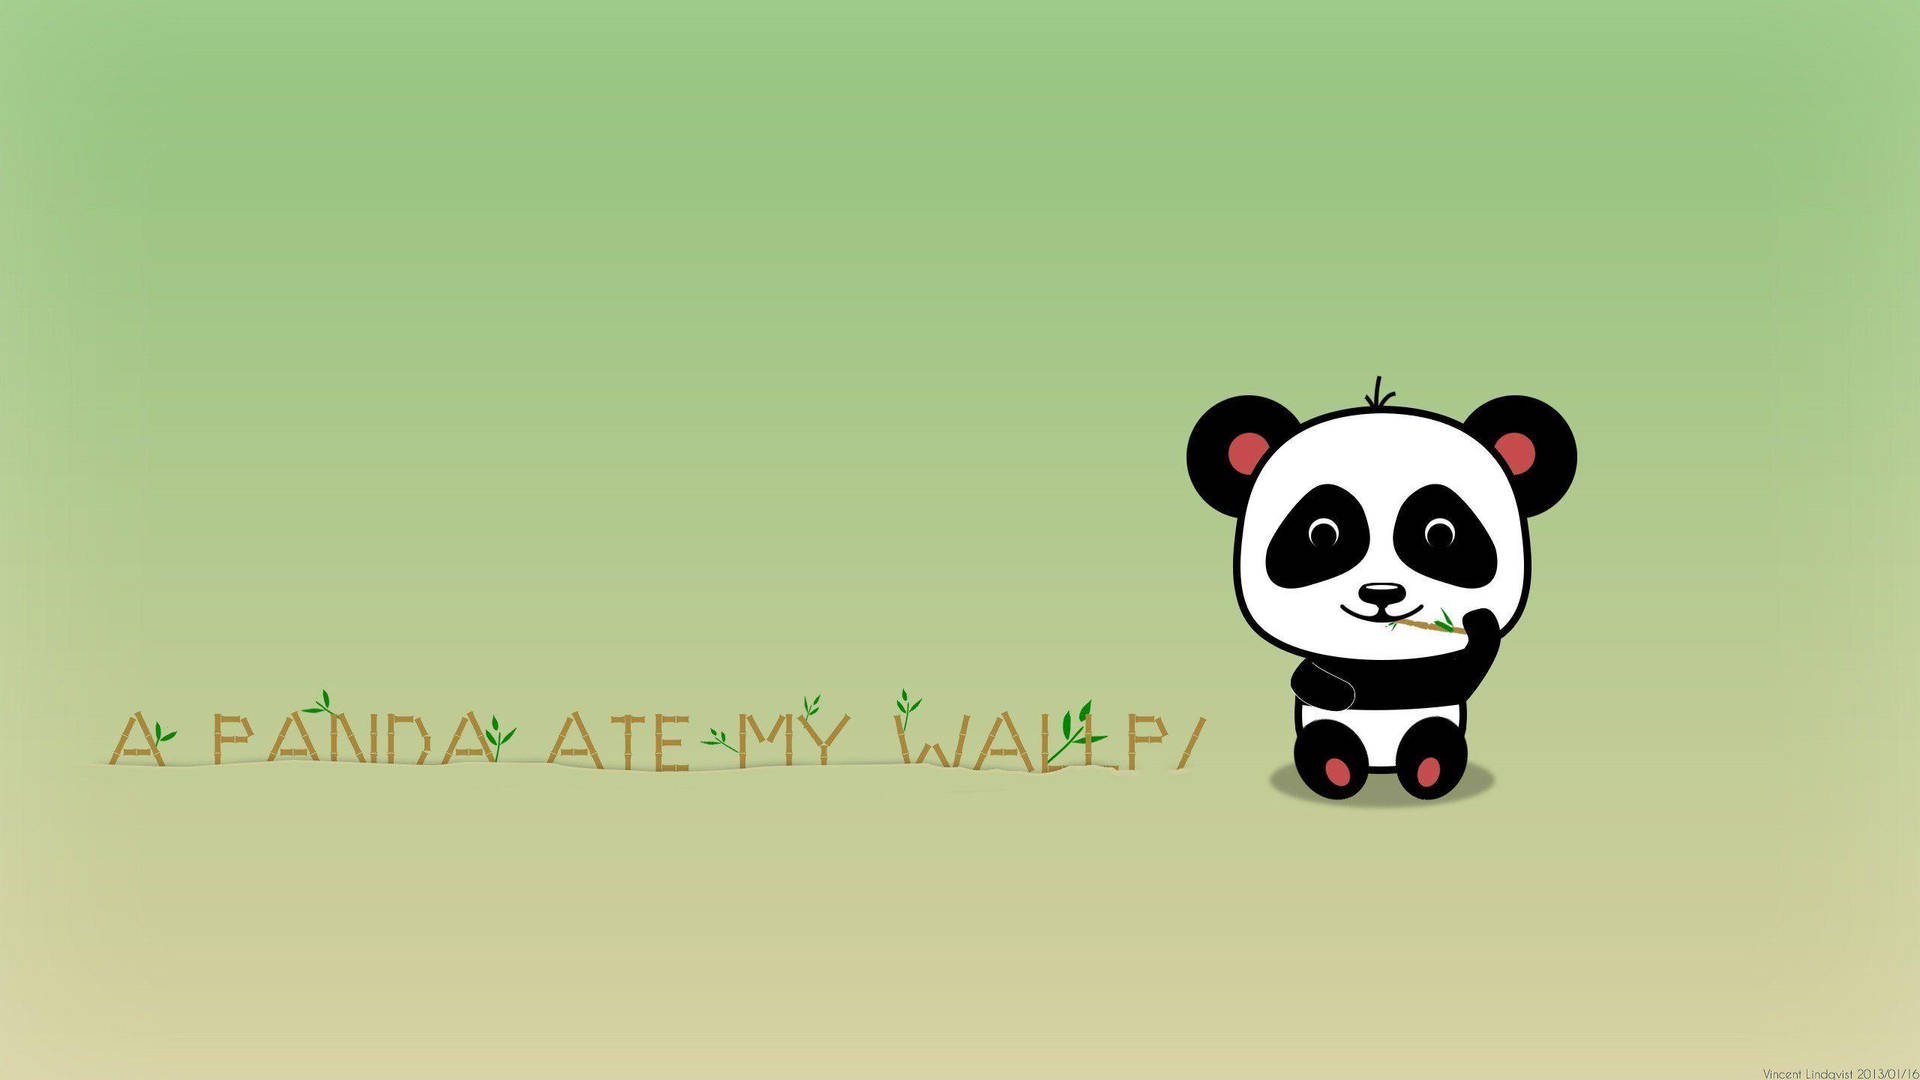 Top 999+ Aesthetic Panda Wallpaper Full HD, 4K✅Free to Use